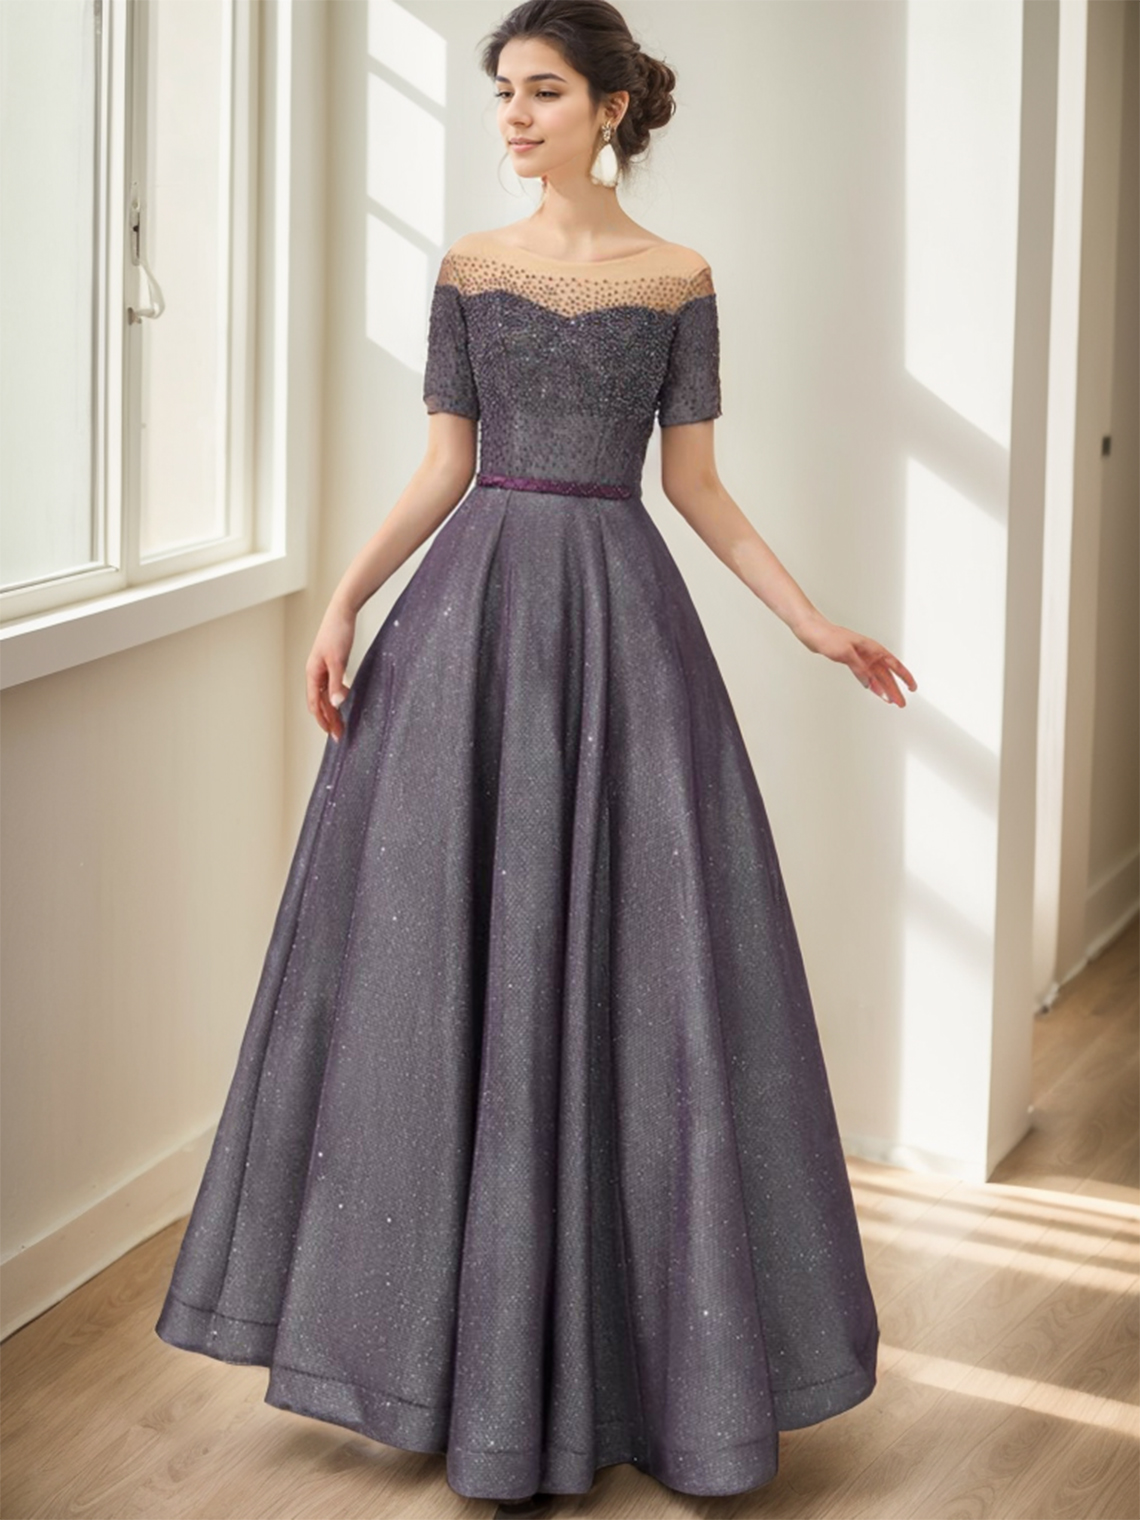 A-Line Evening Dress Jewel Neck Short Sleeves Floor Length Prom Dress